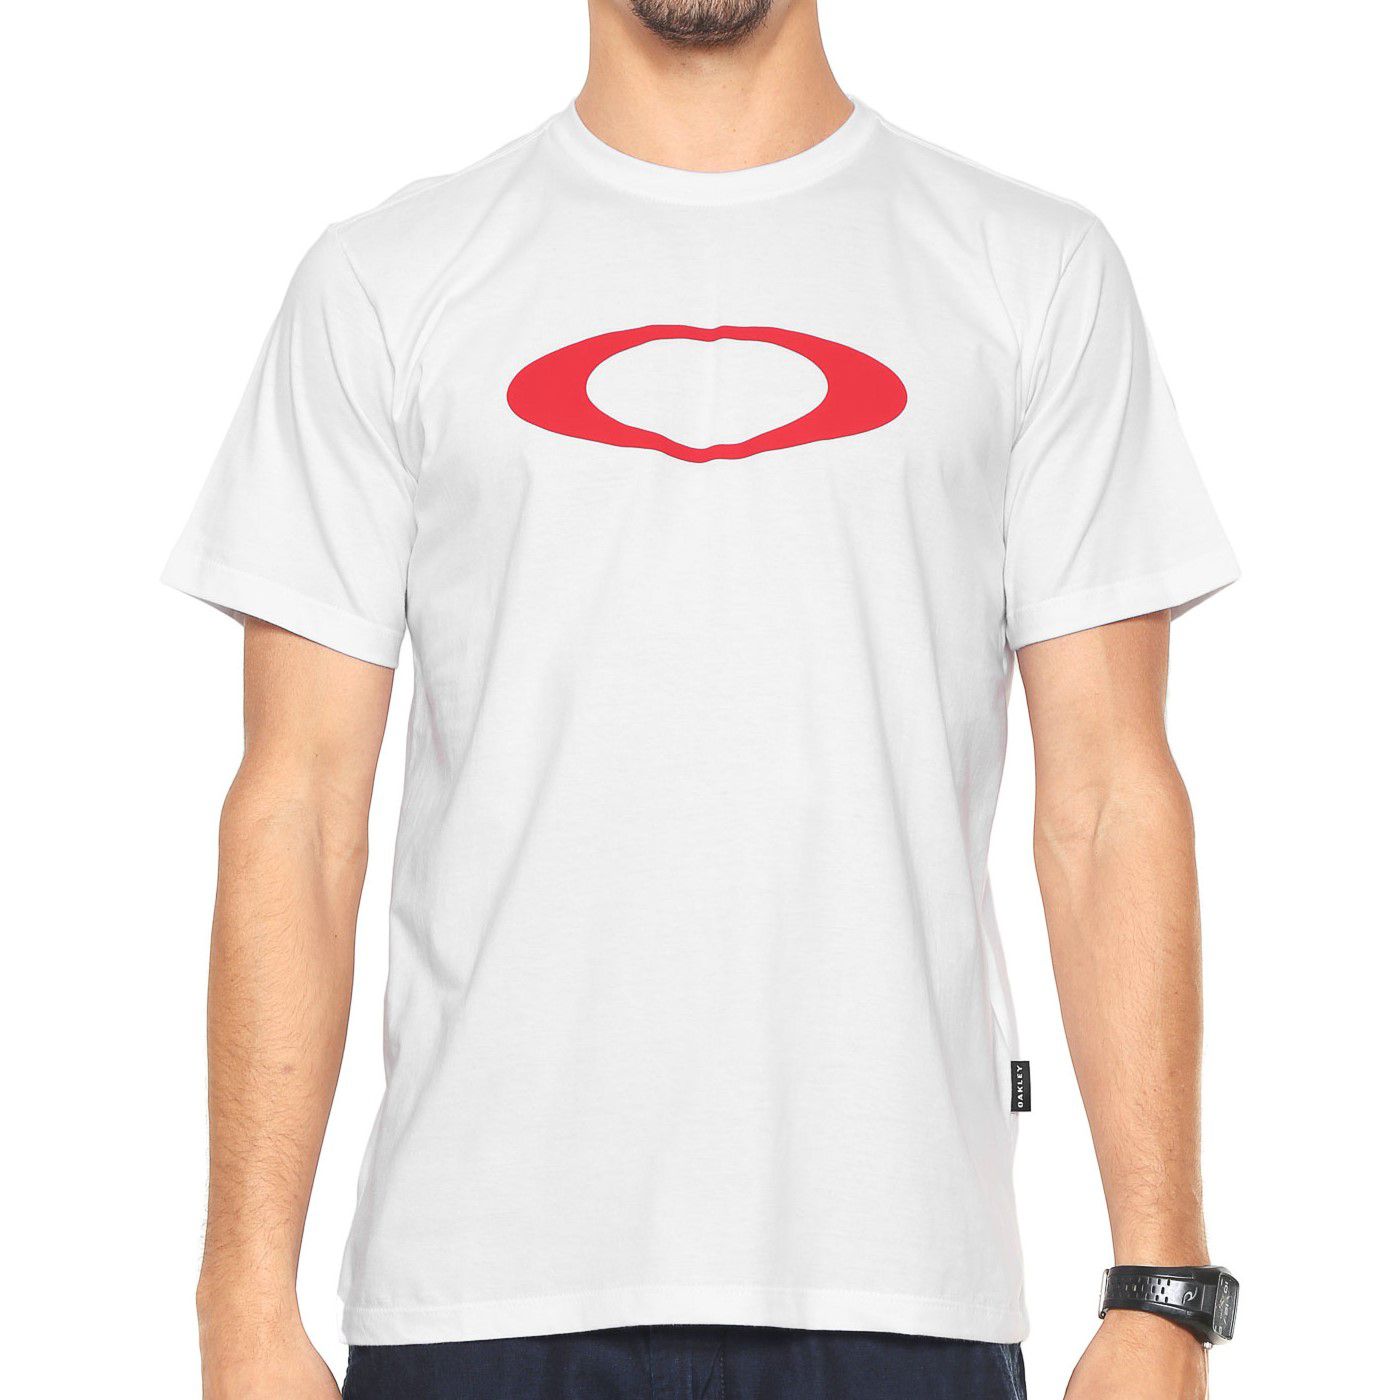 Camiseta Oakley Branca - M - Roupas - Bela Vista, São Paulo 1223105093